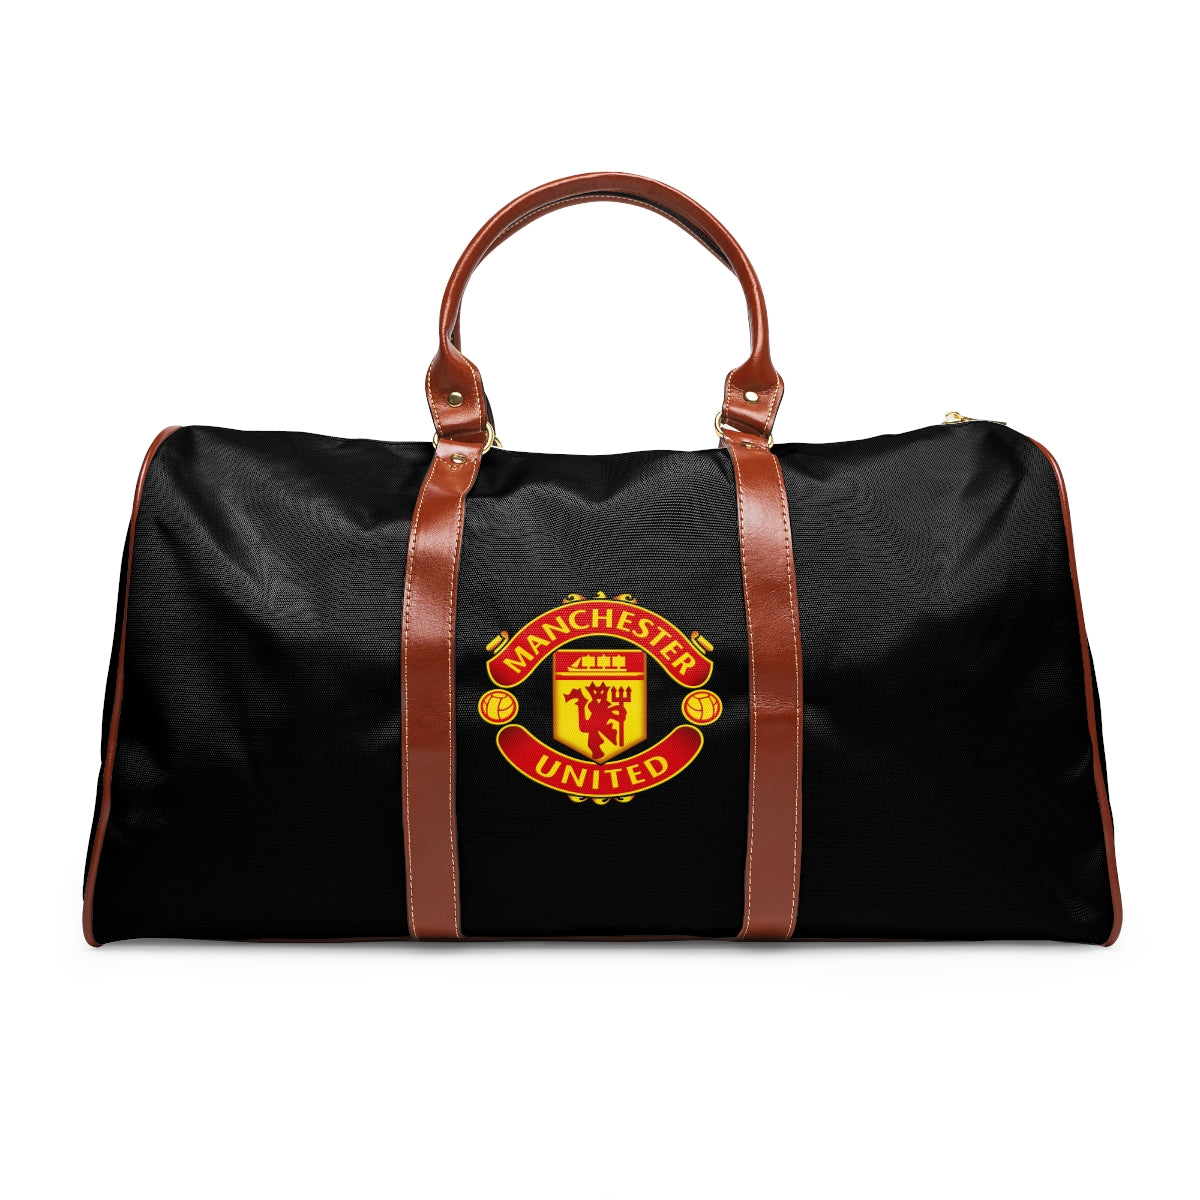 Manchester United Waterproof Travel Bag - Black